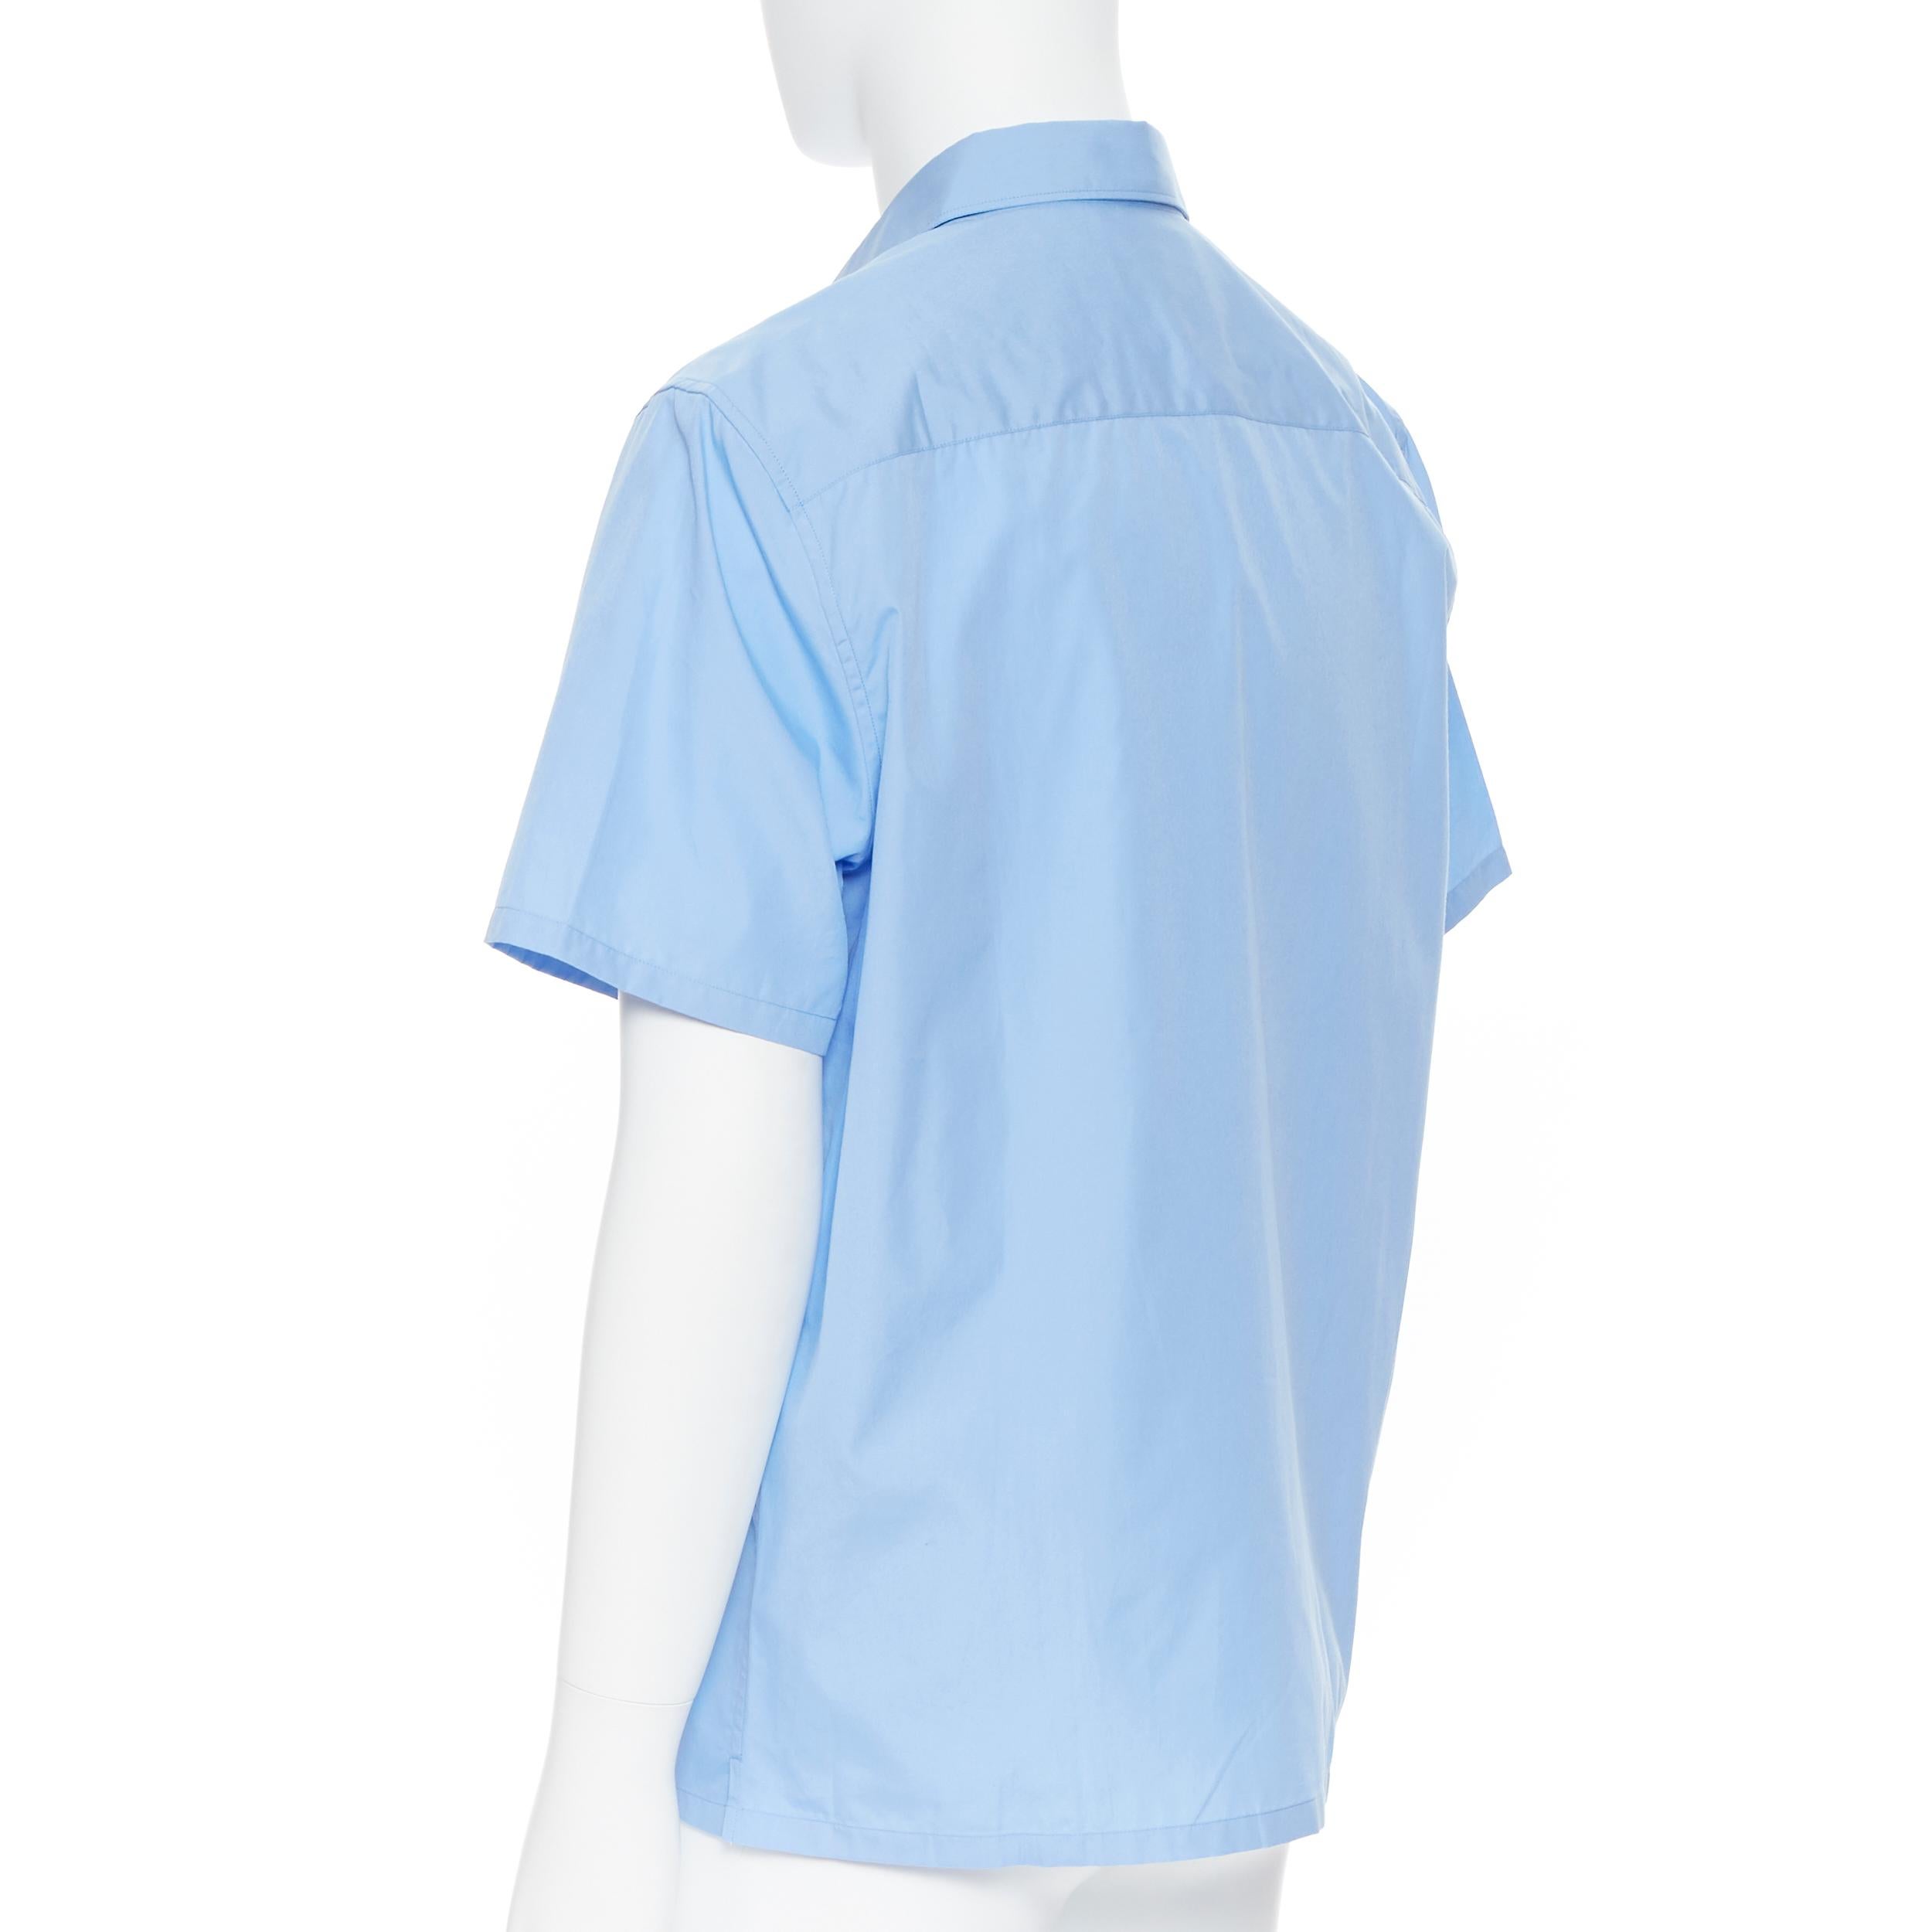 Men's new PRADA 2019 light blue rubber logo patch breast pocket casual shirt EU41 L